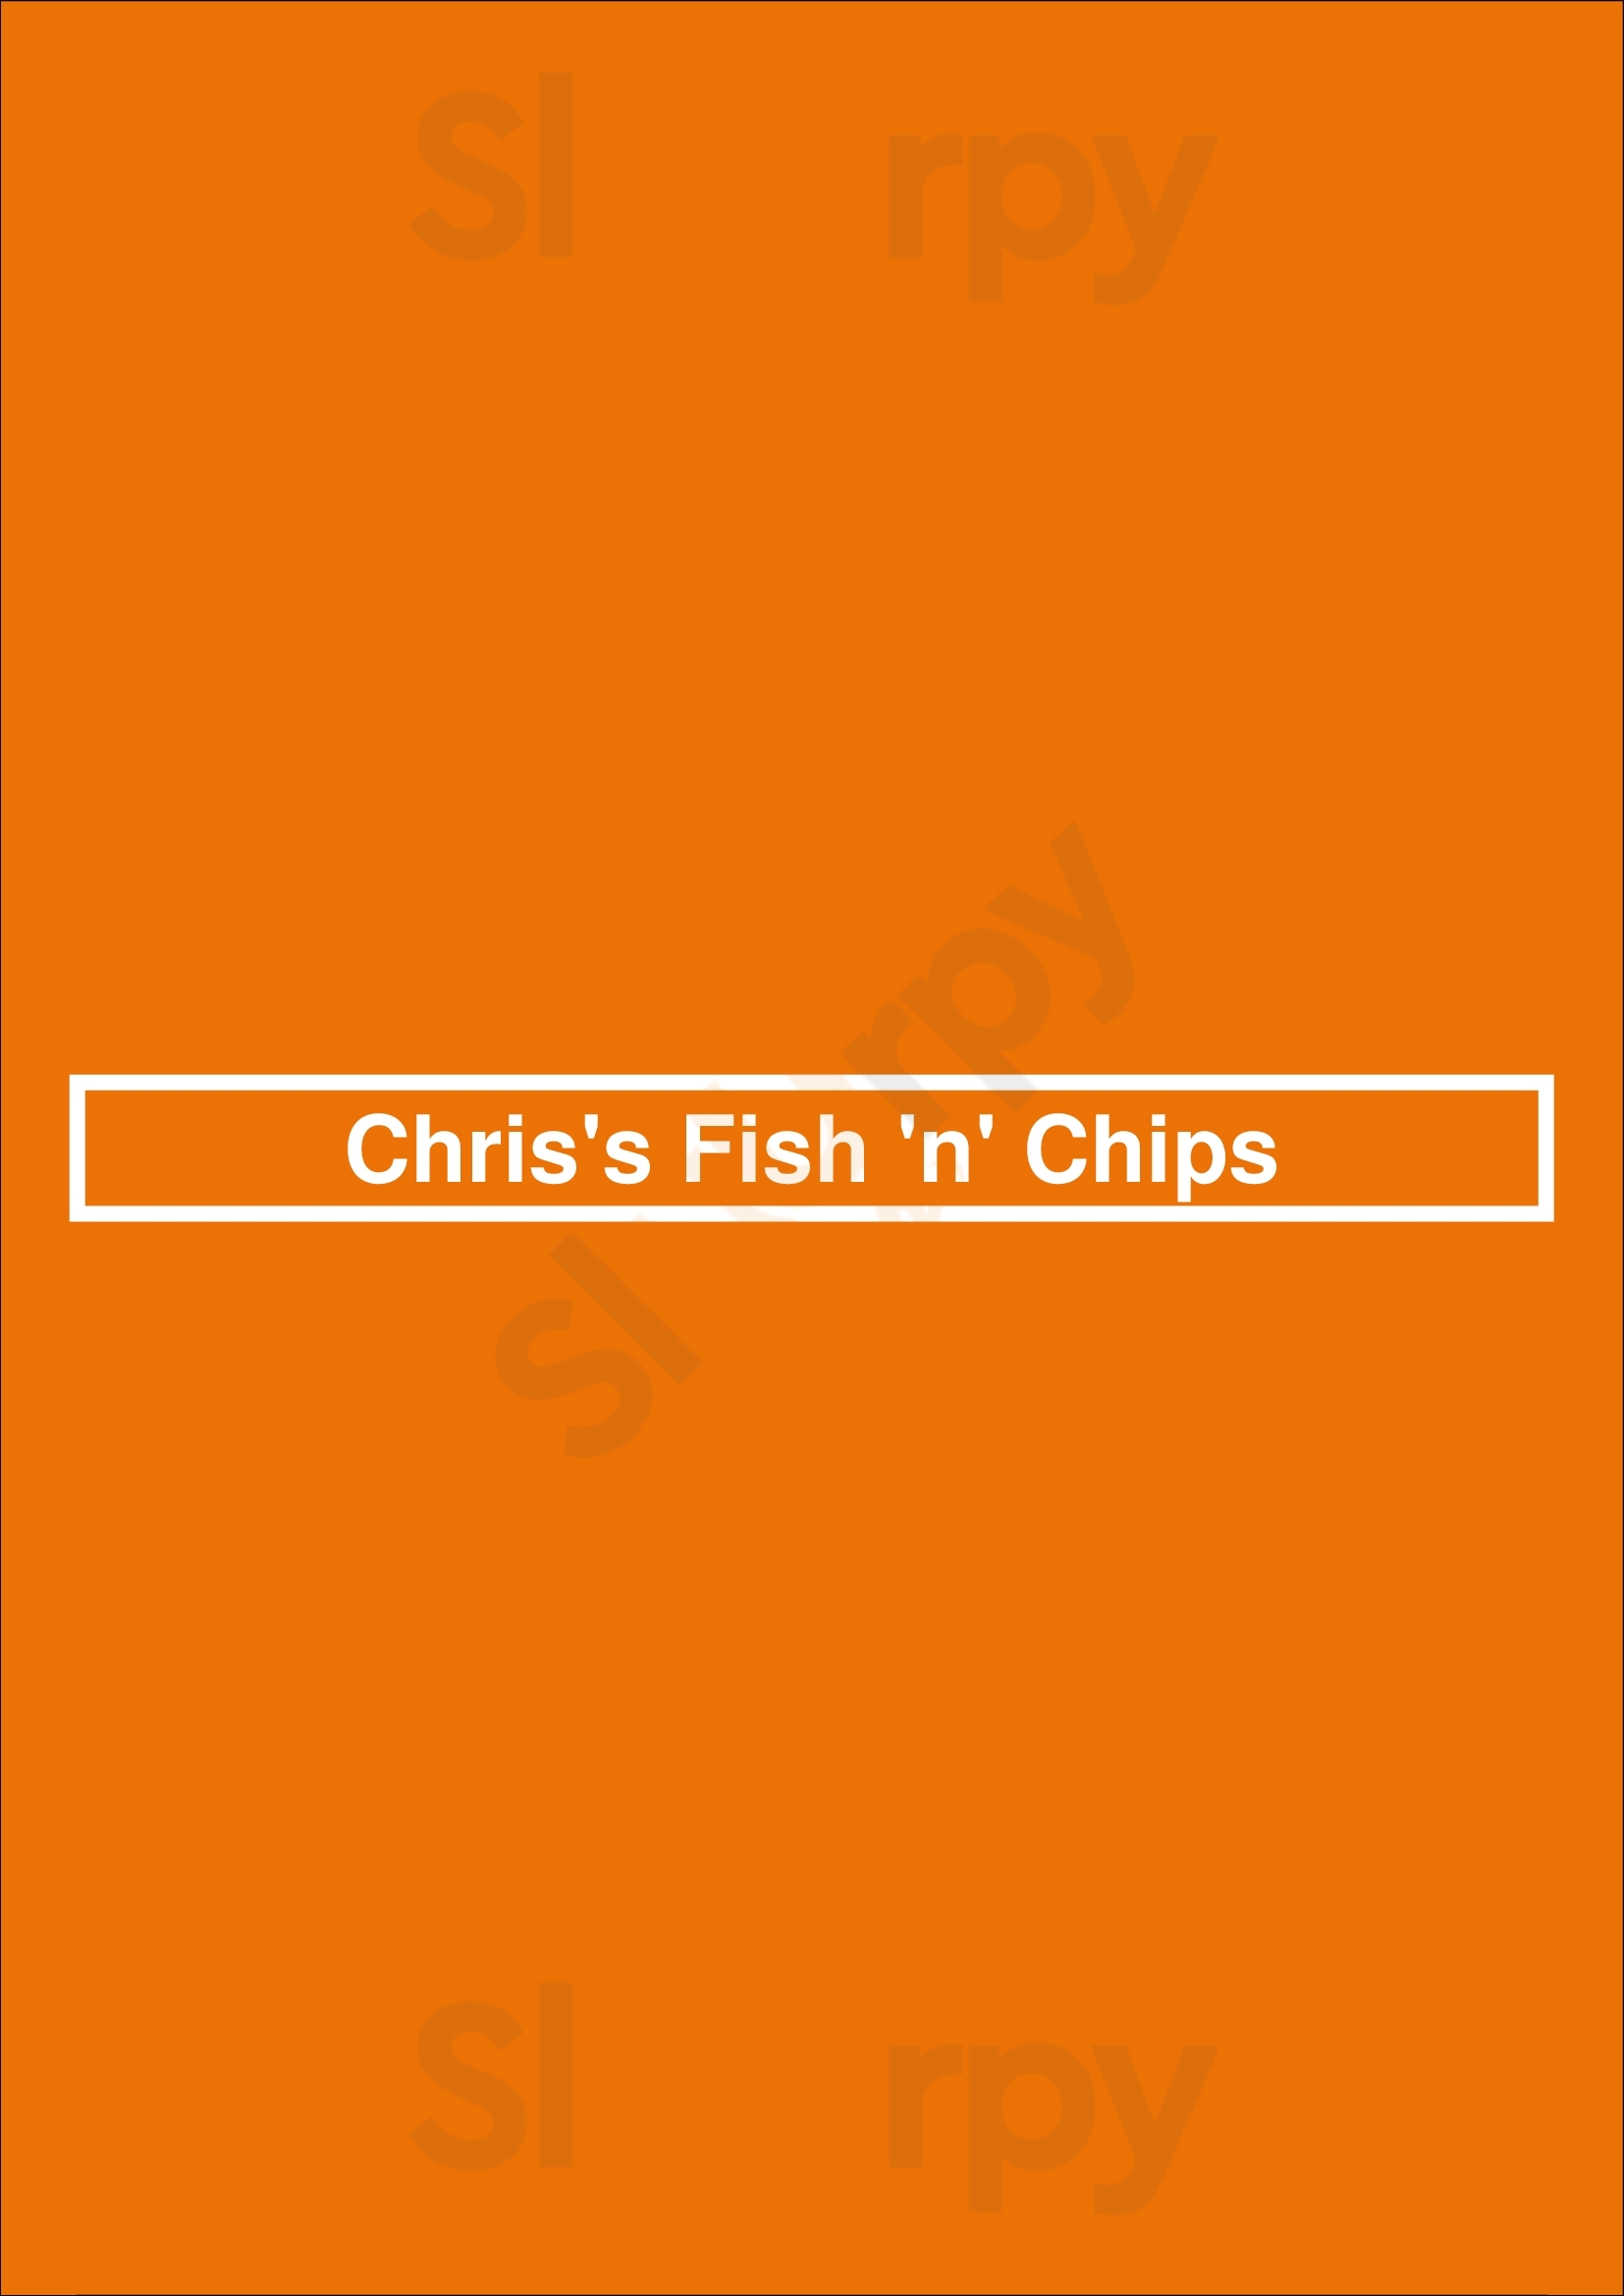 Chris's Fish 'n' Chips Barwell Menu - 1